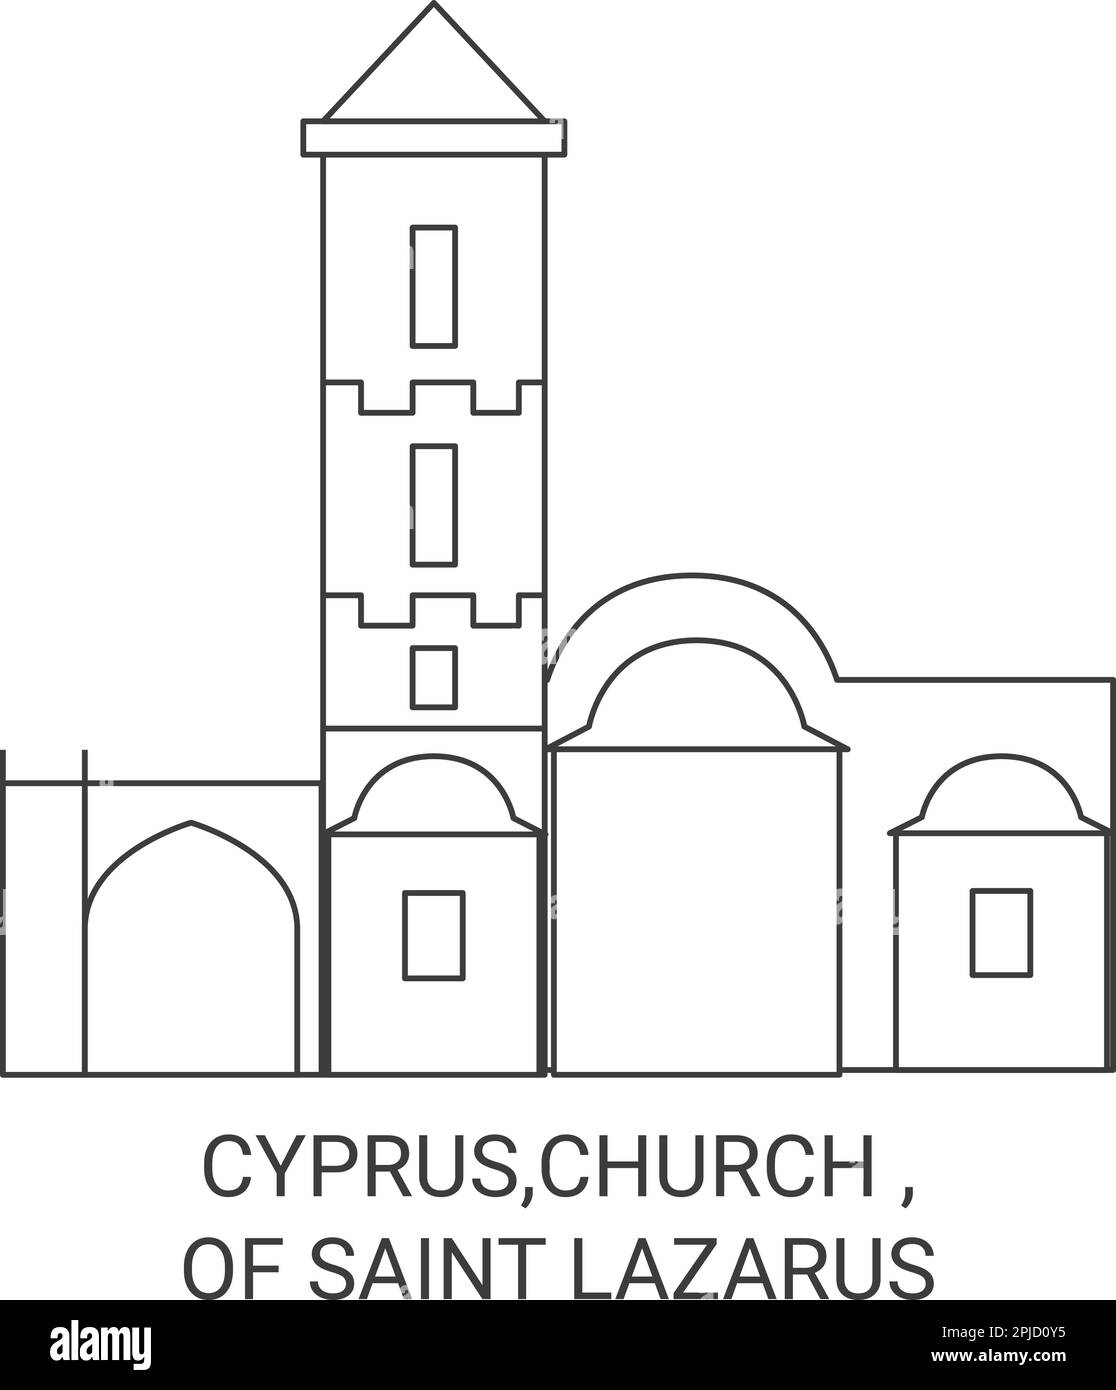 Cyprus, Church Of Saint Lazarus travel landmark vector illustration Stock Vector